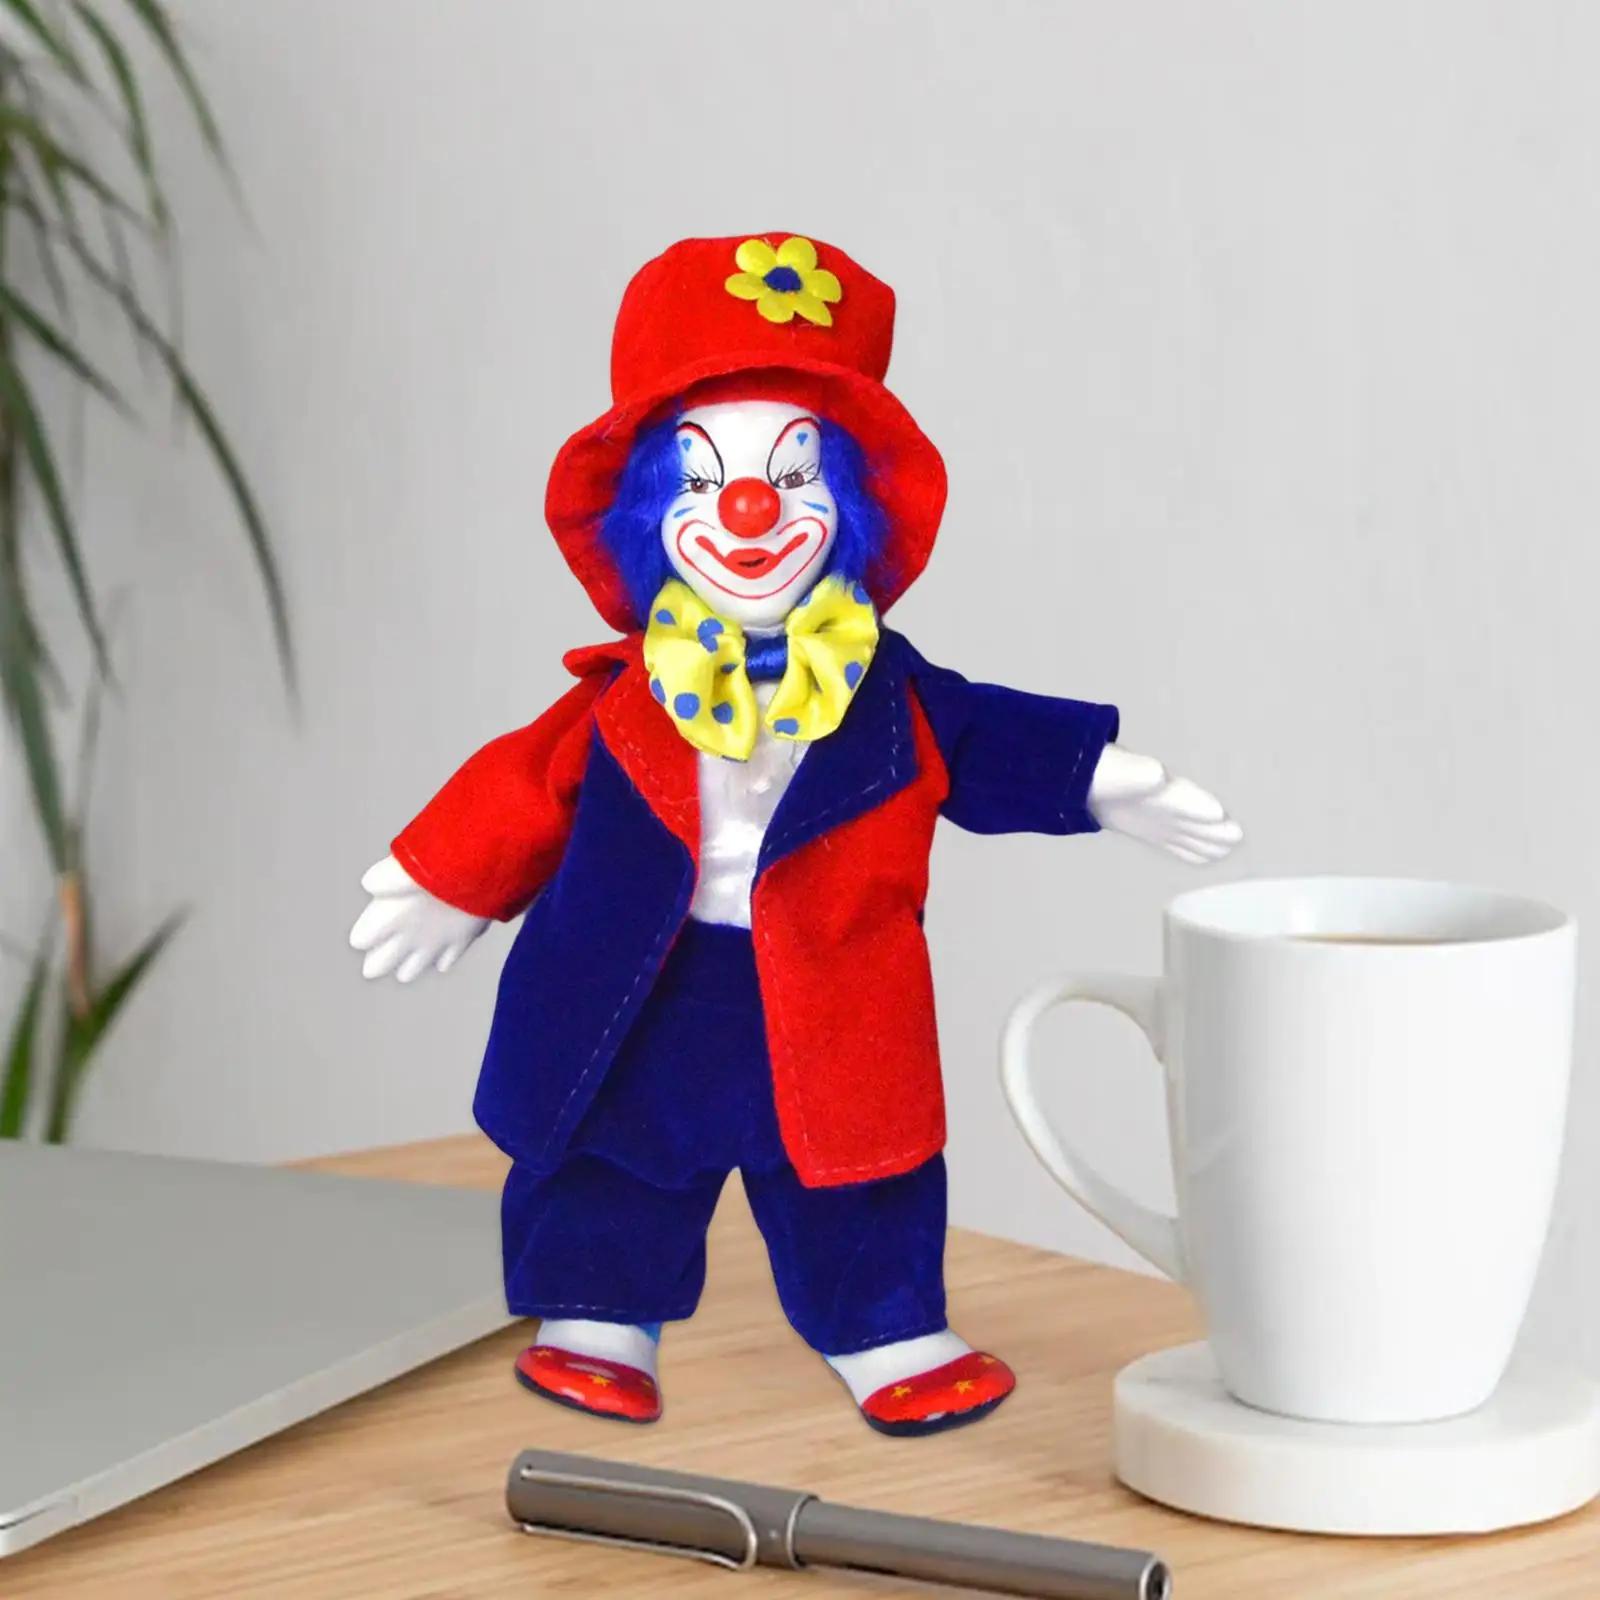 18cm Clown Doll Dolls Model Toy Collectible Arts Crafts Clown Stuffed Doll for Desktop Room Bedroom Decor Birthdays Gift